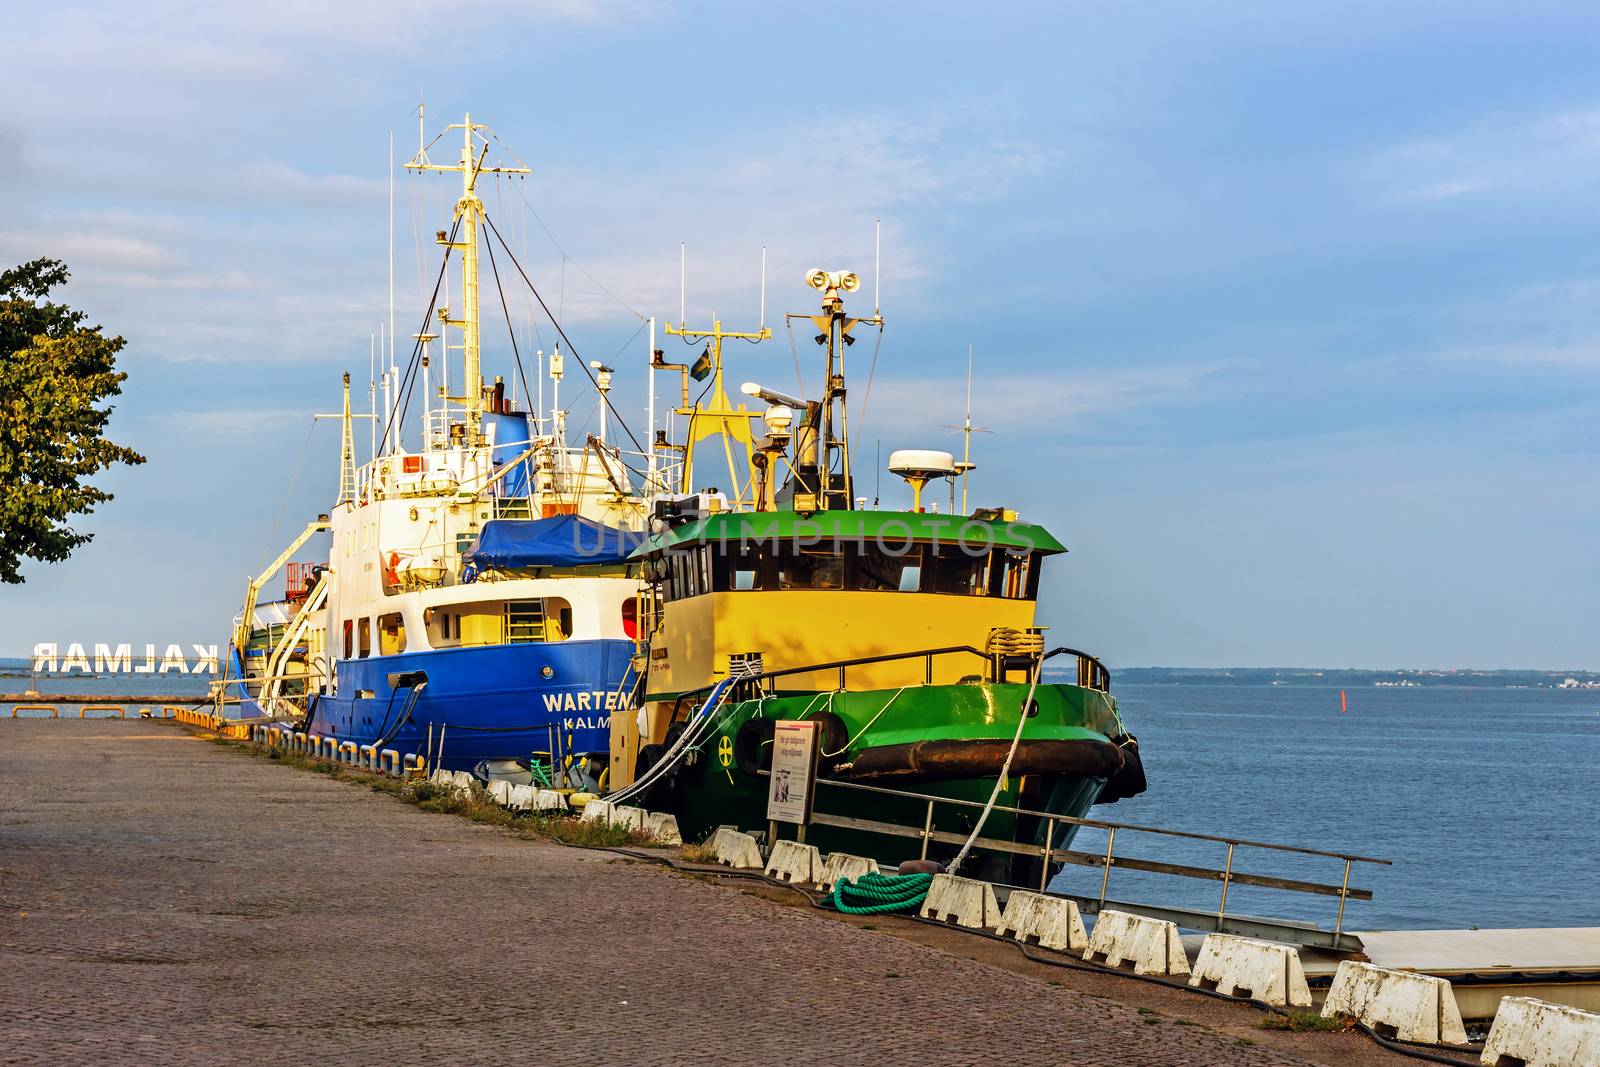 Ships moored in the Port of Kalmar by pawel_szczepanski